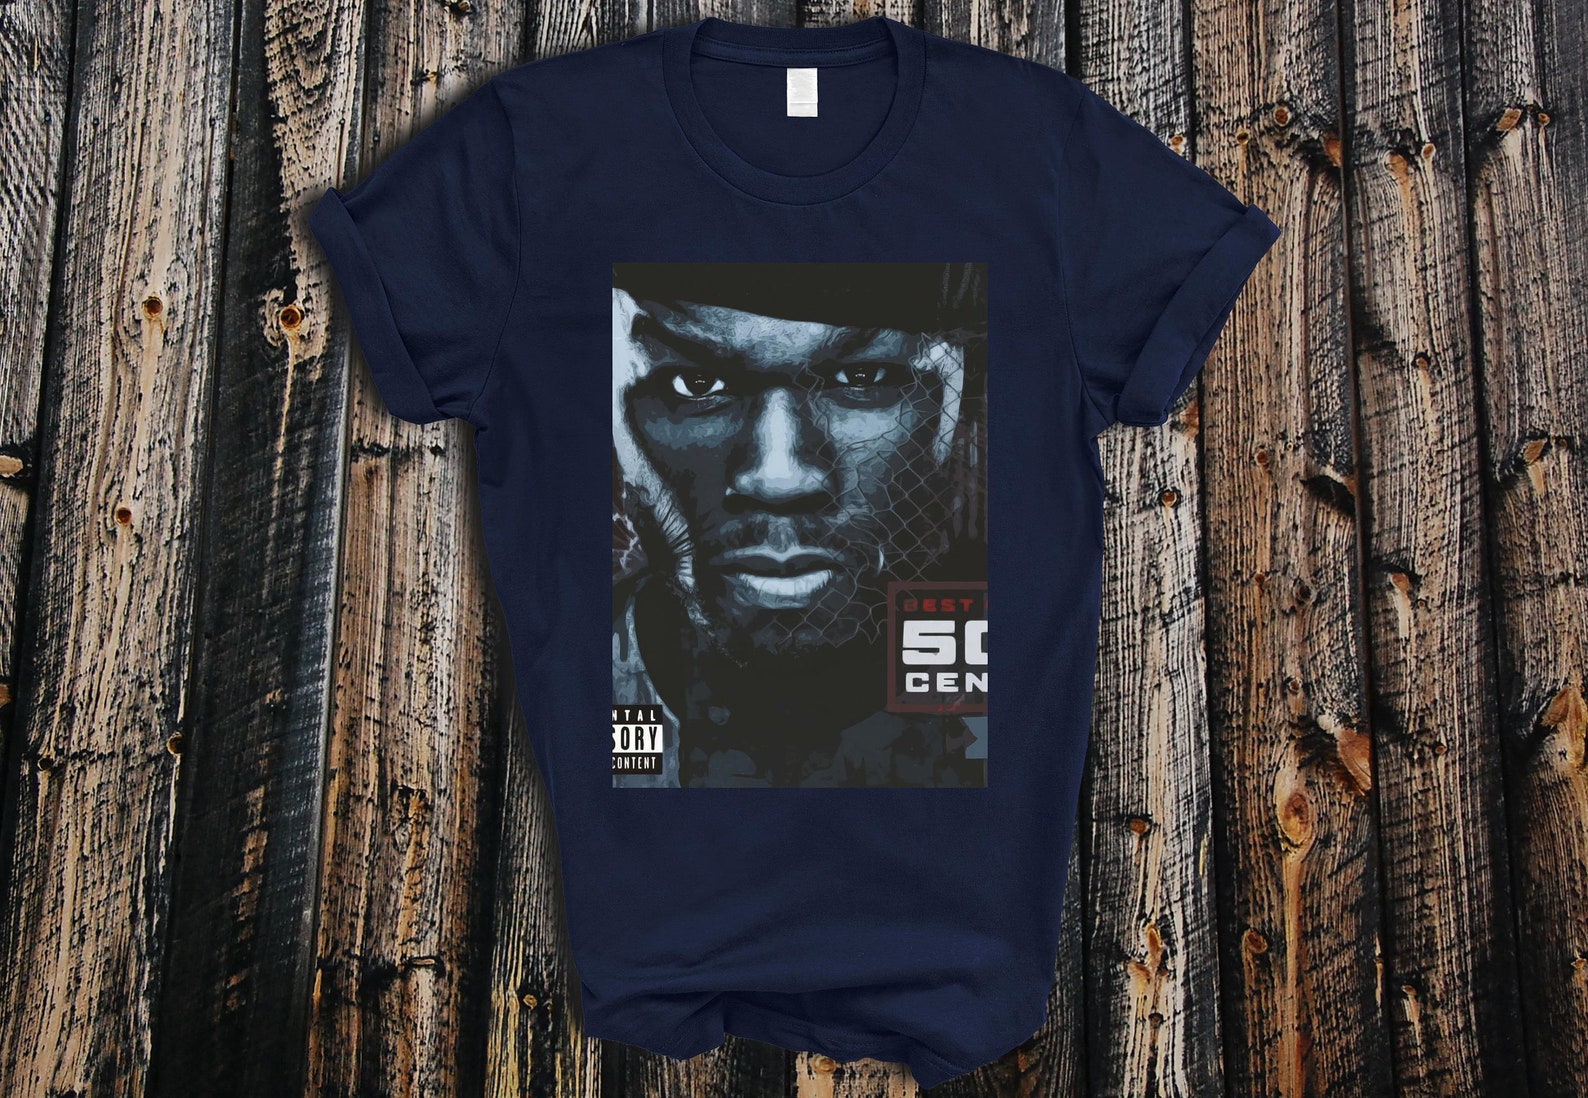 50 Cent Shirt | Etsy